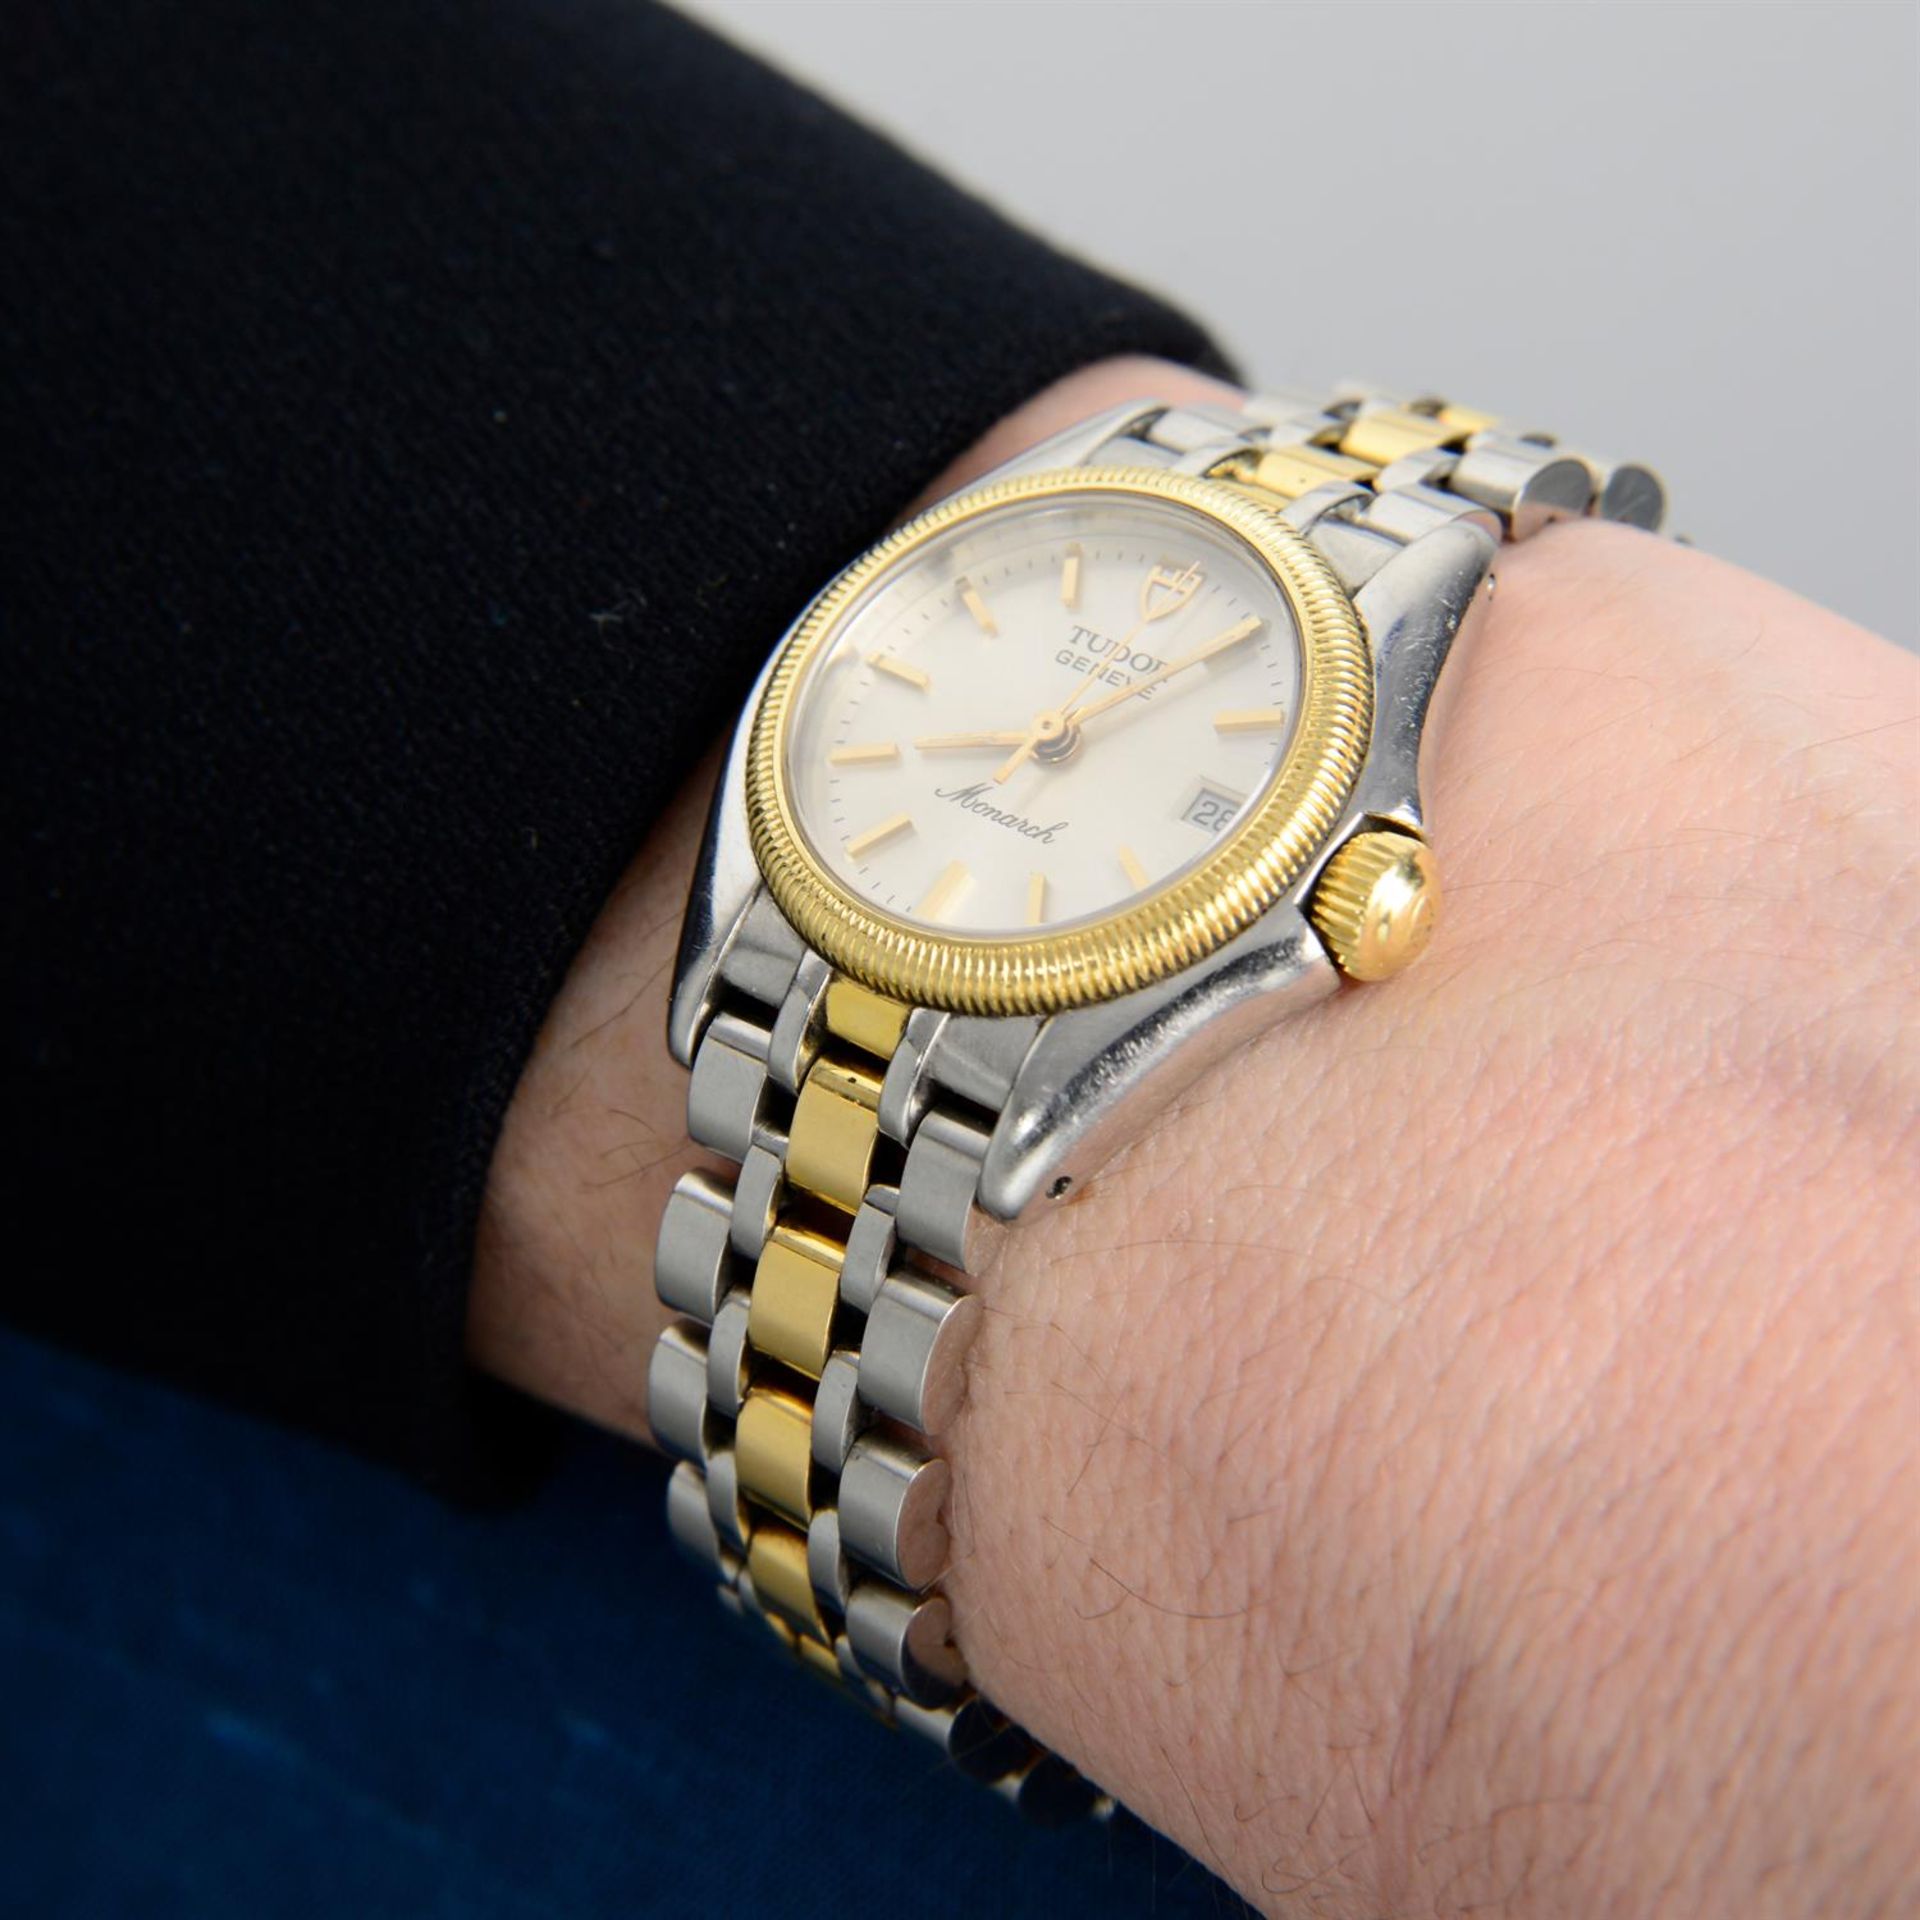 Tudor - a Monarch watch, 27mm. - Image 5 of 5